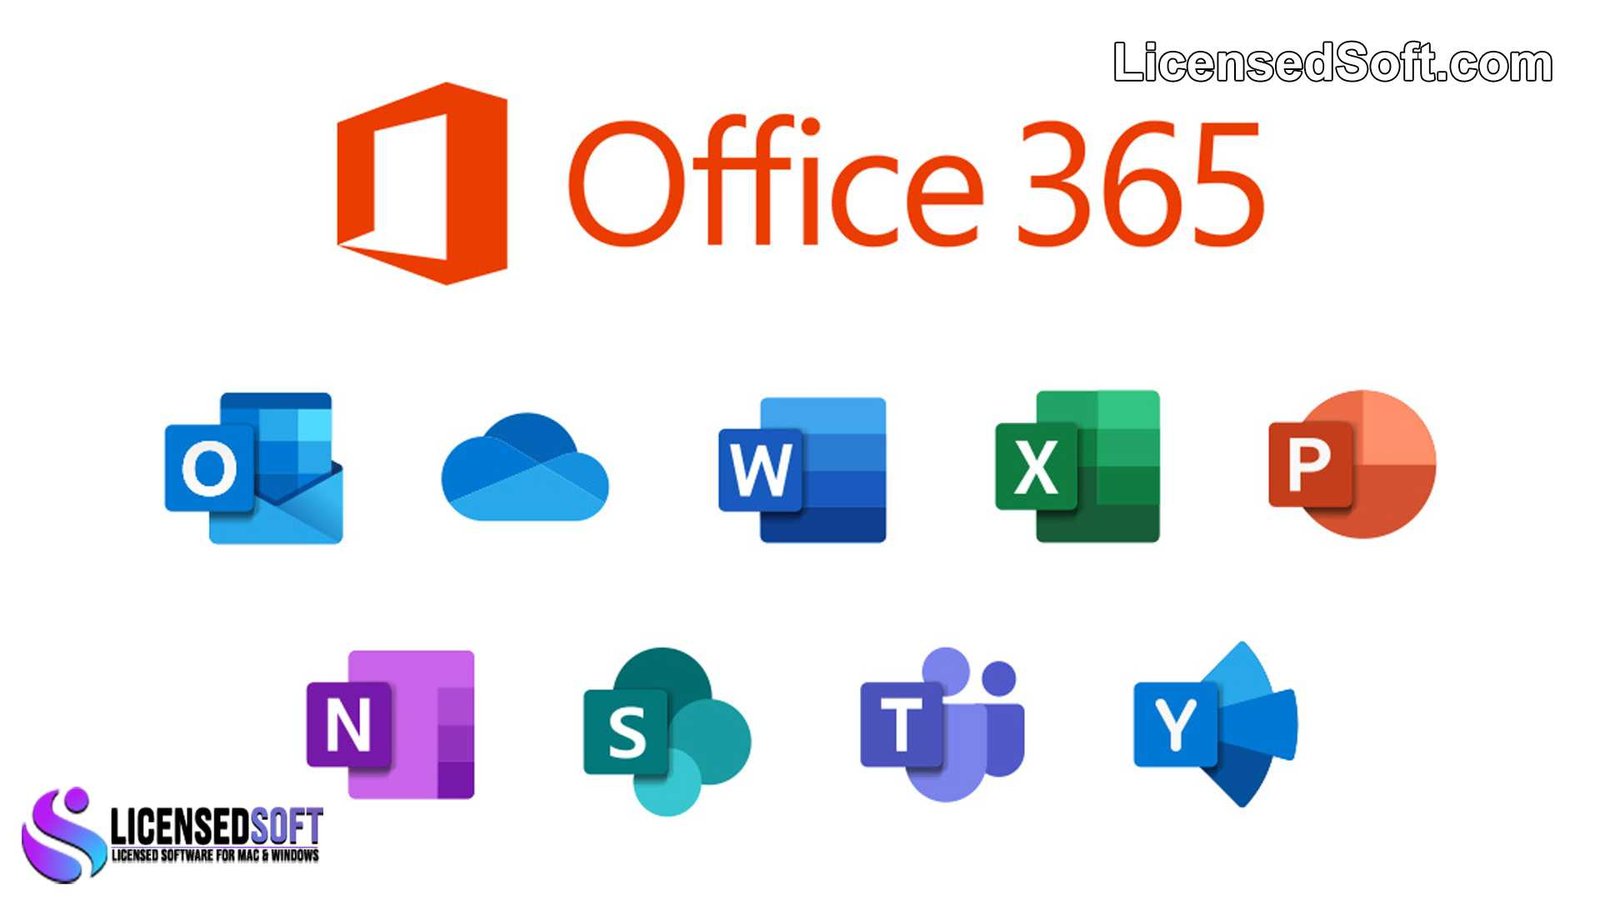 Office 365 Admin Premium Lifetime License By LicensedSoft